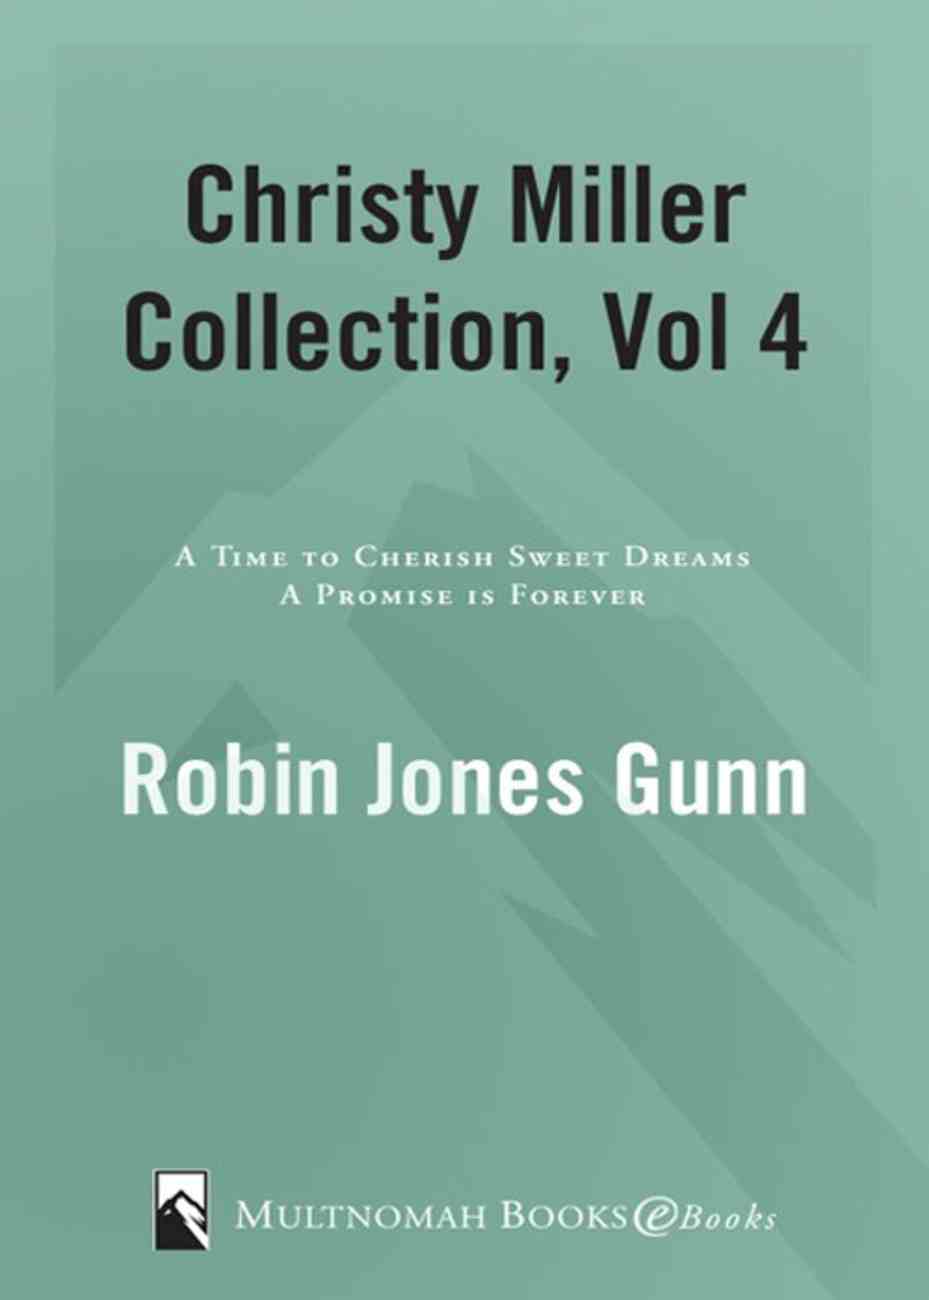 Christy Miller Collection, Vol. 3 by Robin Jones Gunn